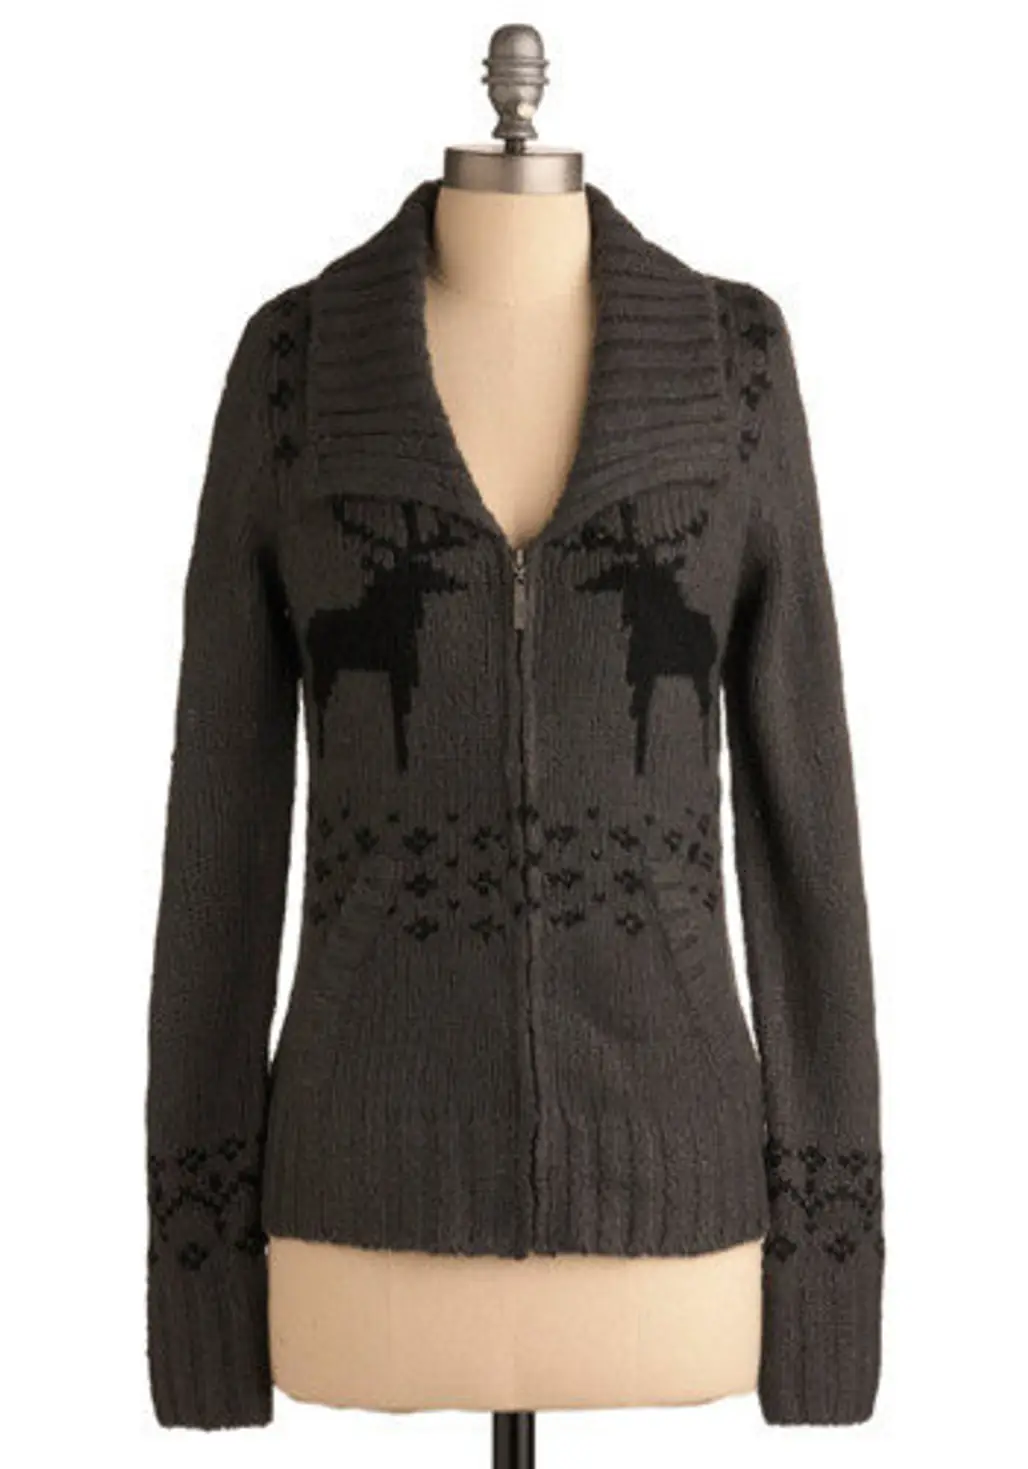 Martha My Deer Sweater